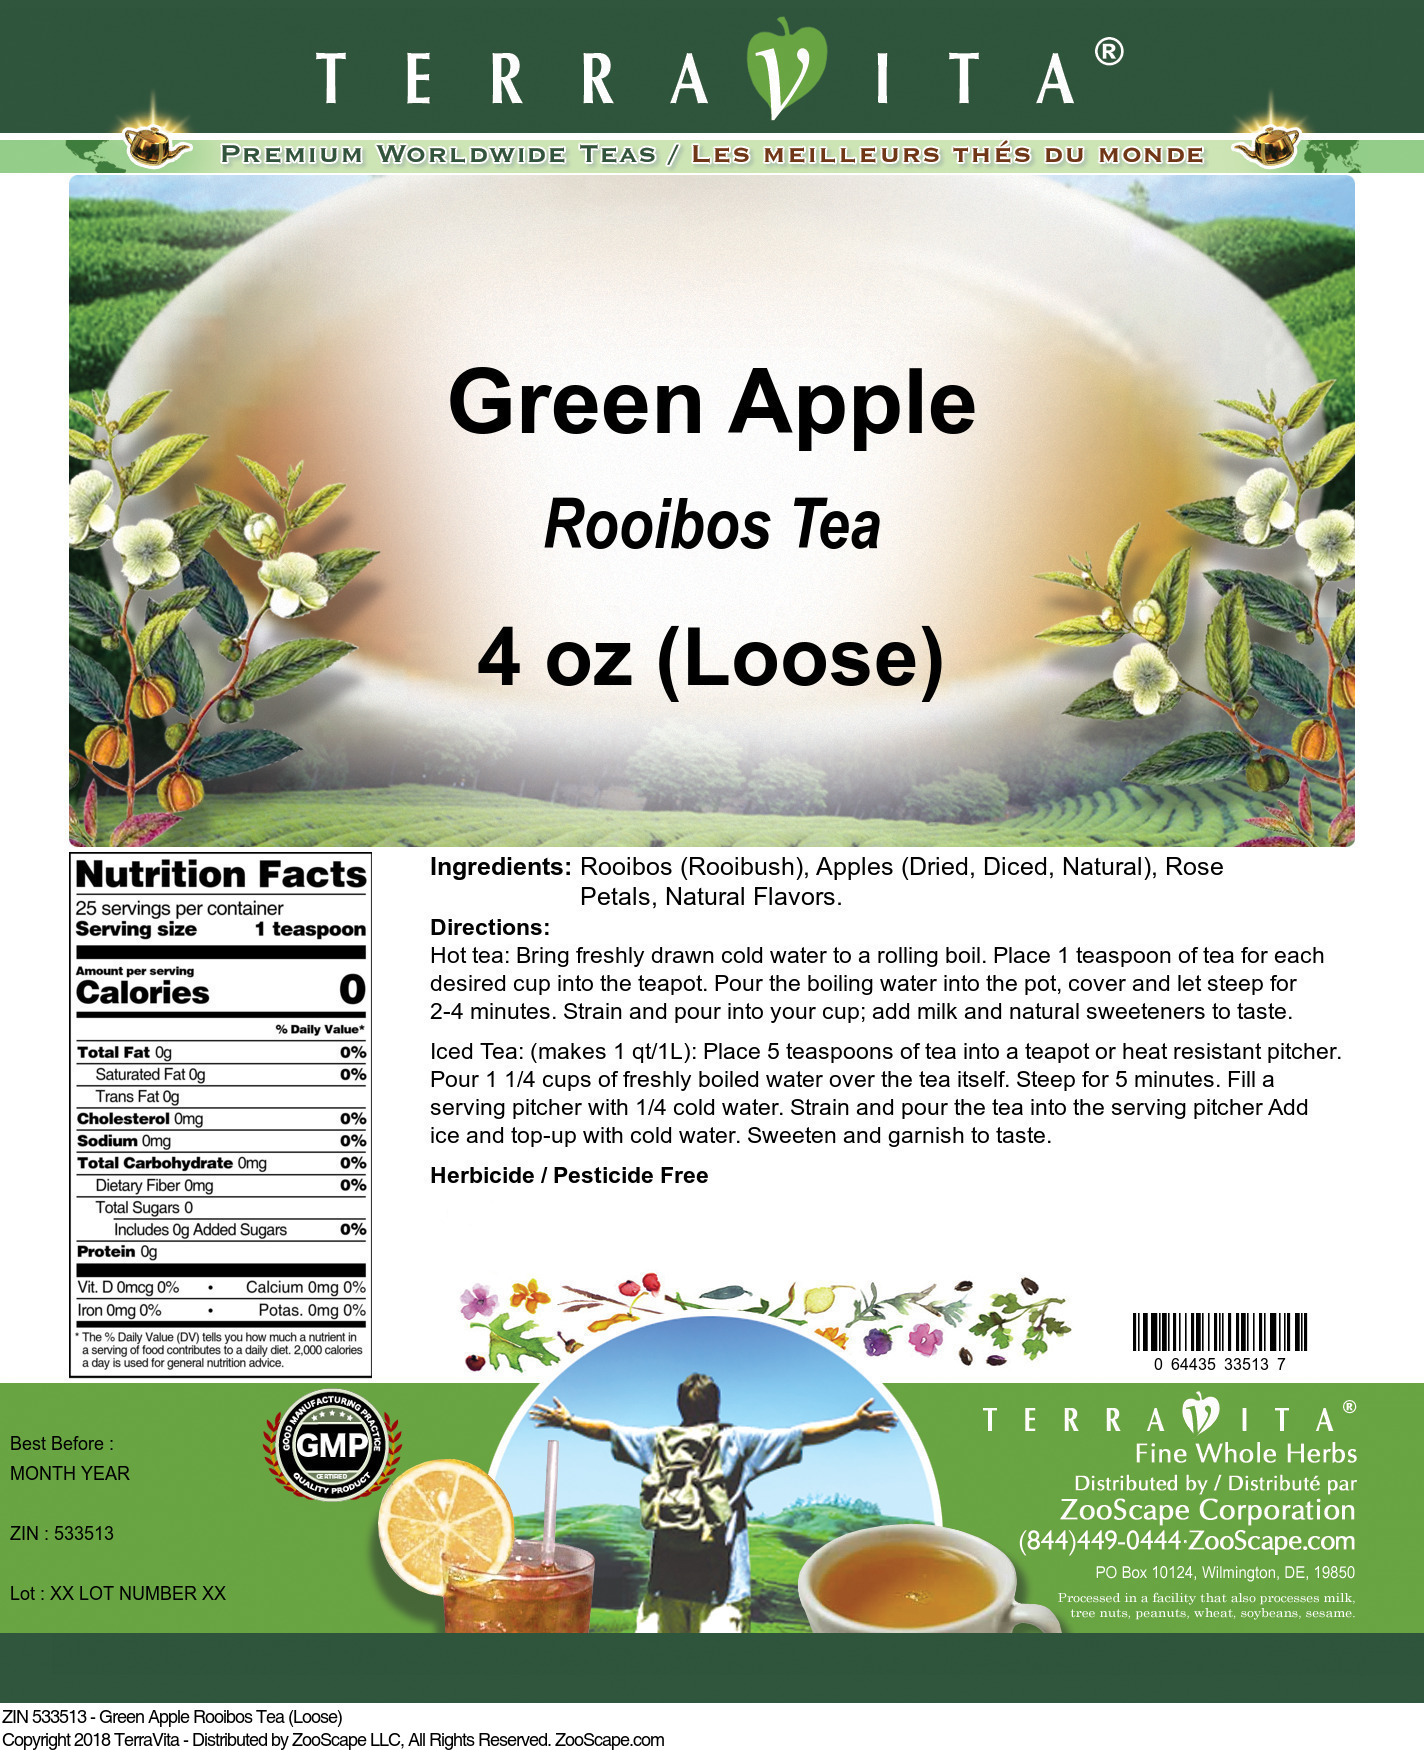 Green Apple Rooibos Tea (Loose) - Label